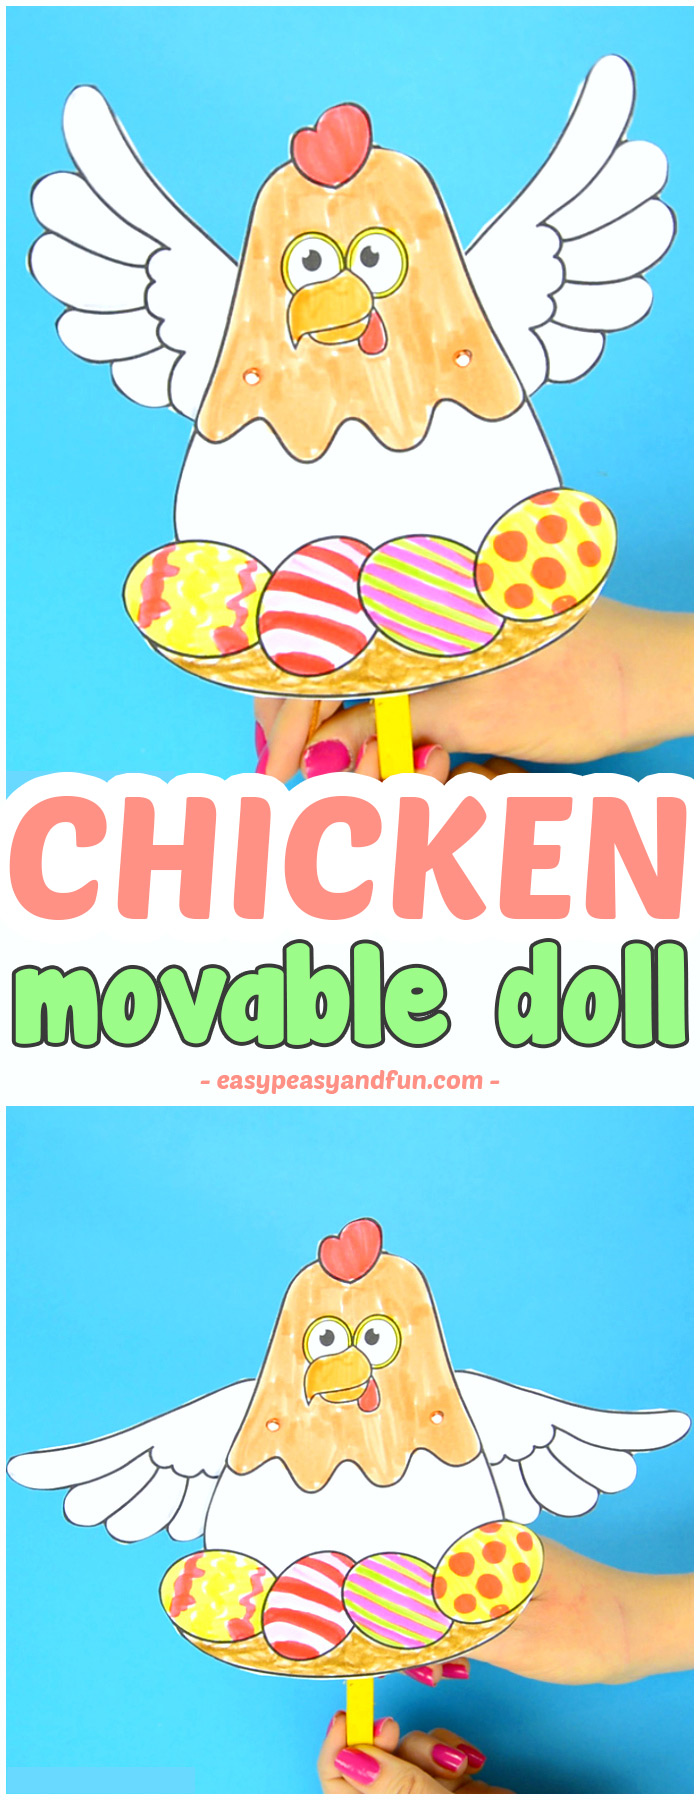 Movable Chicken Paper Doll Fun Easter Crafts for Kids #craftsforkids #activitiesforkids #eastercrafts